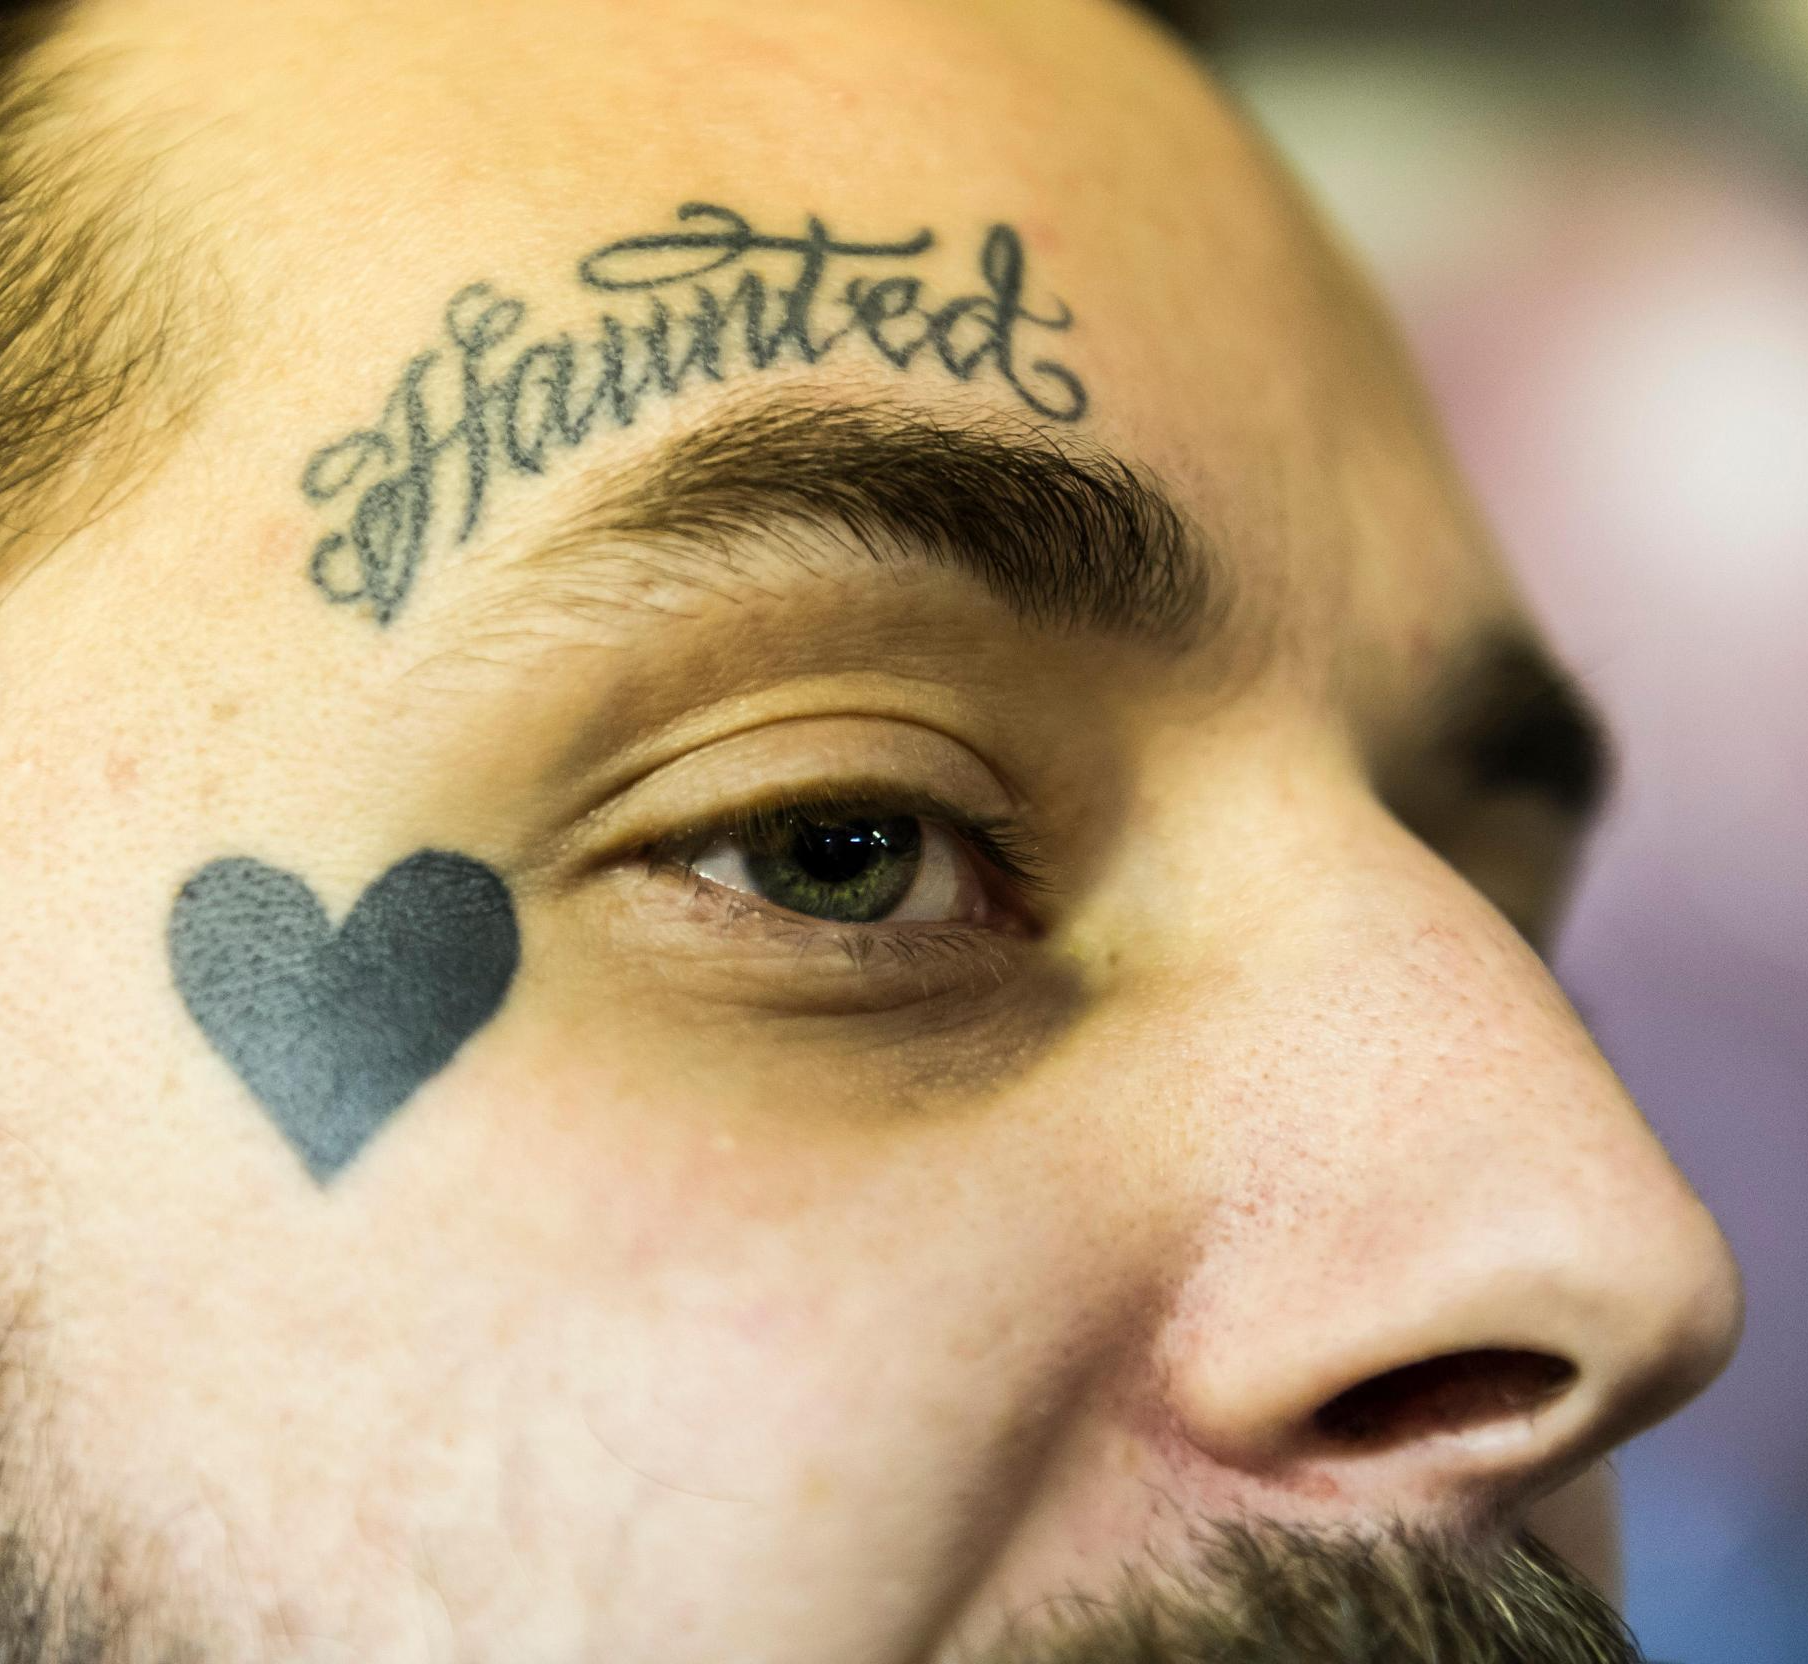 Society isn't quite ready for facial tattoos | CNN